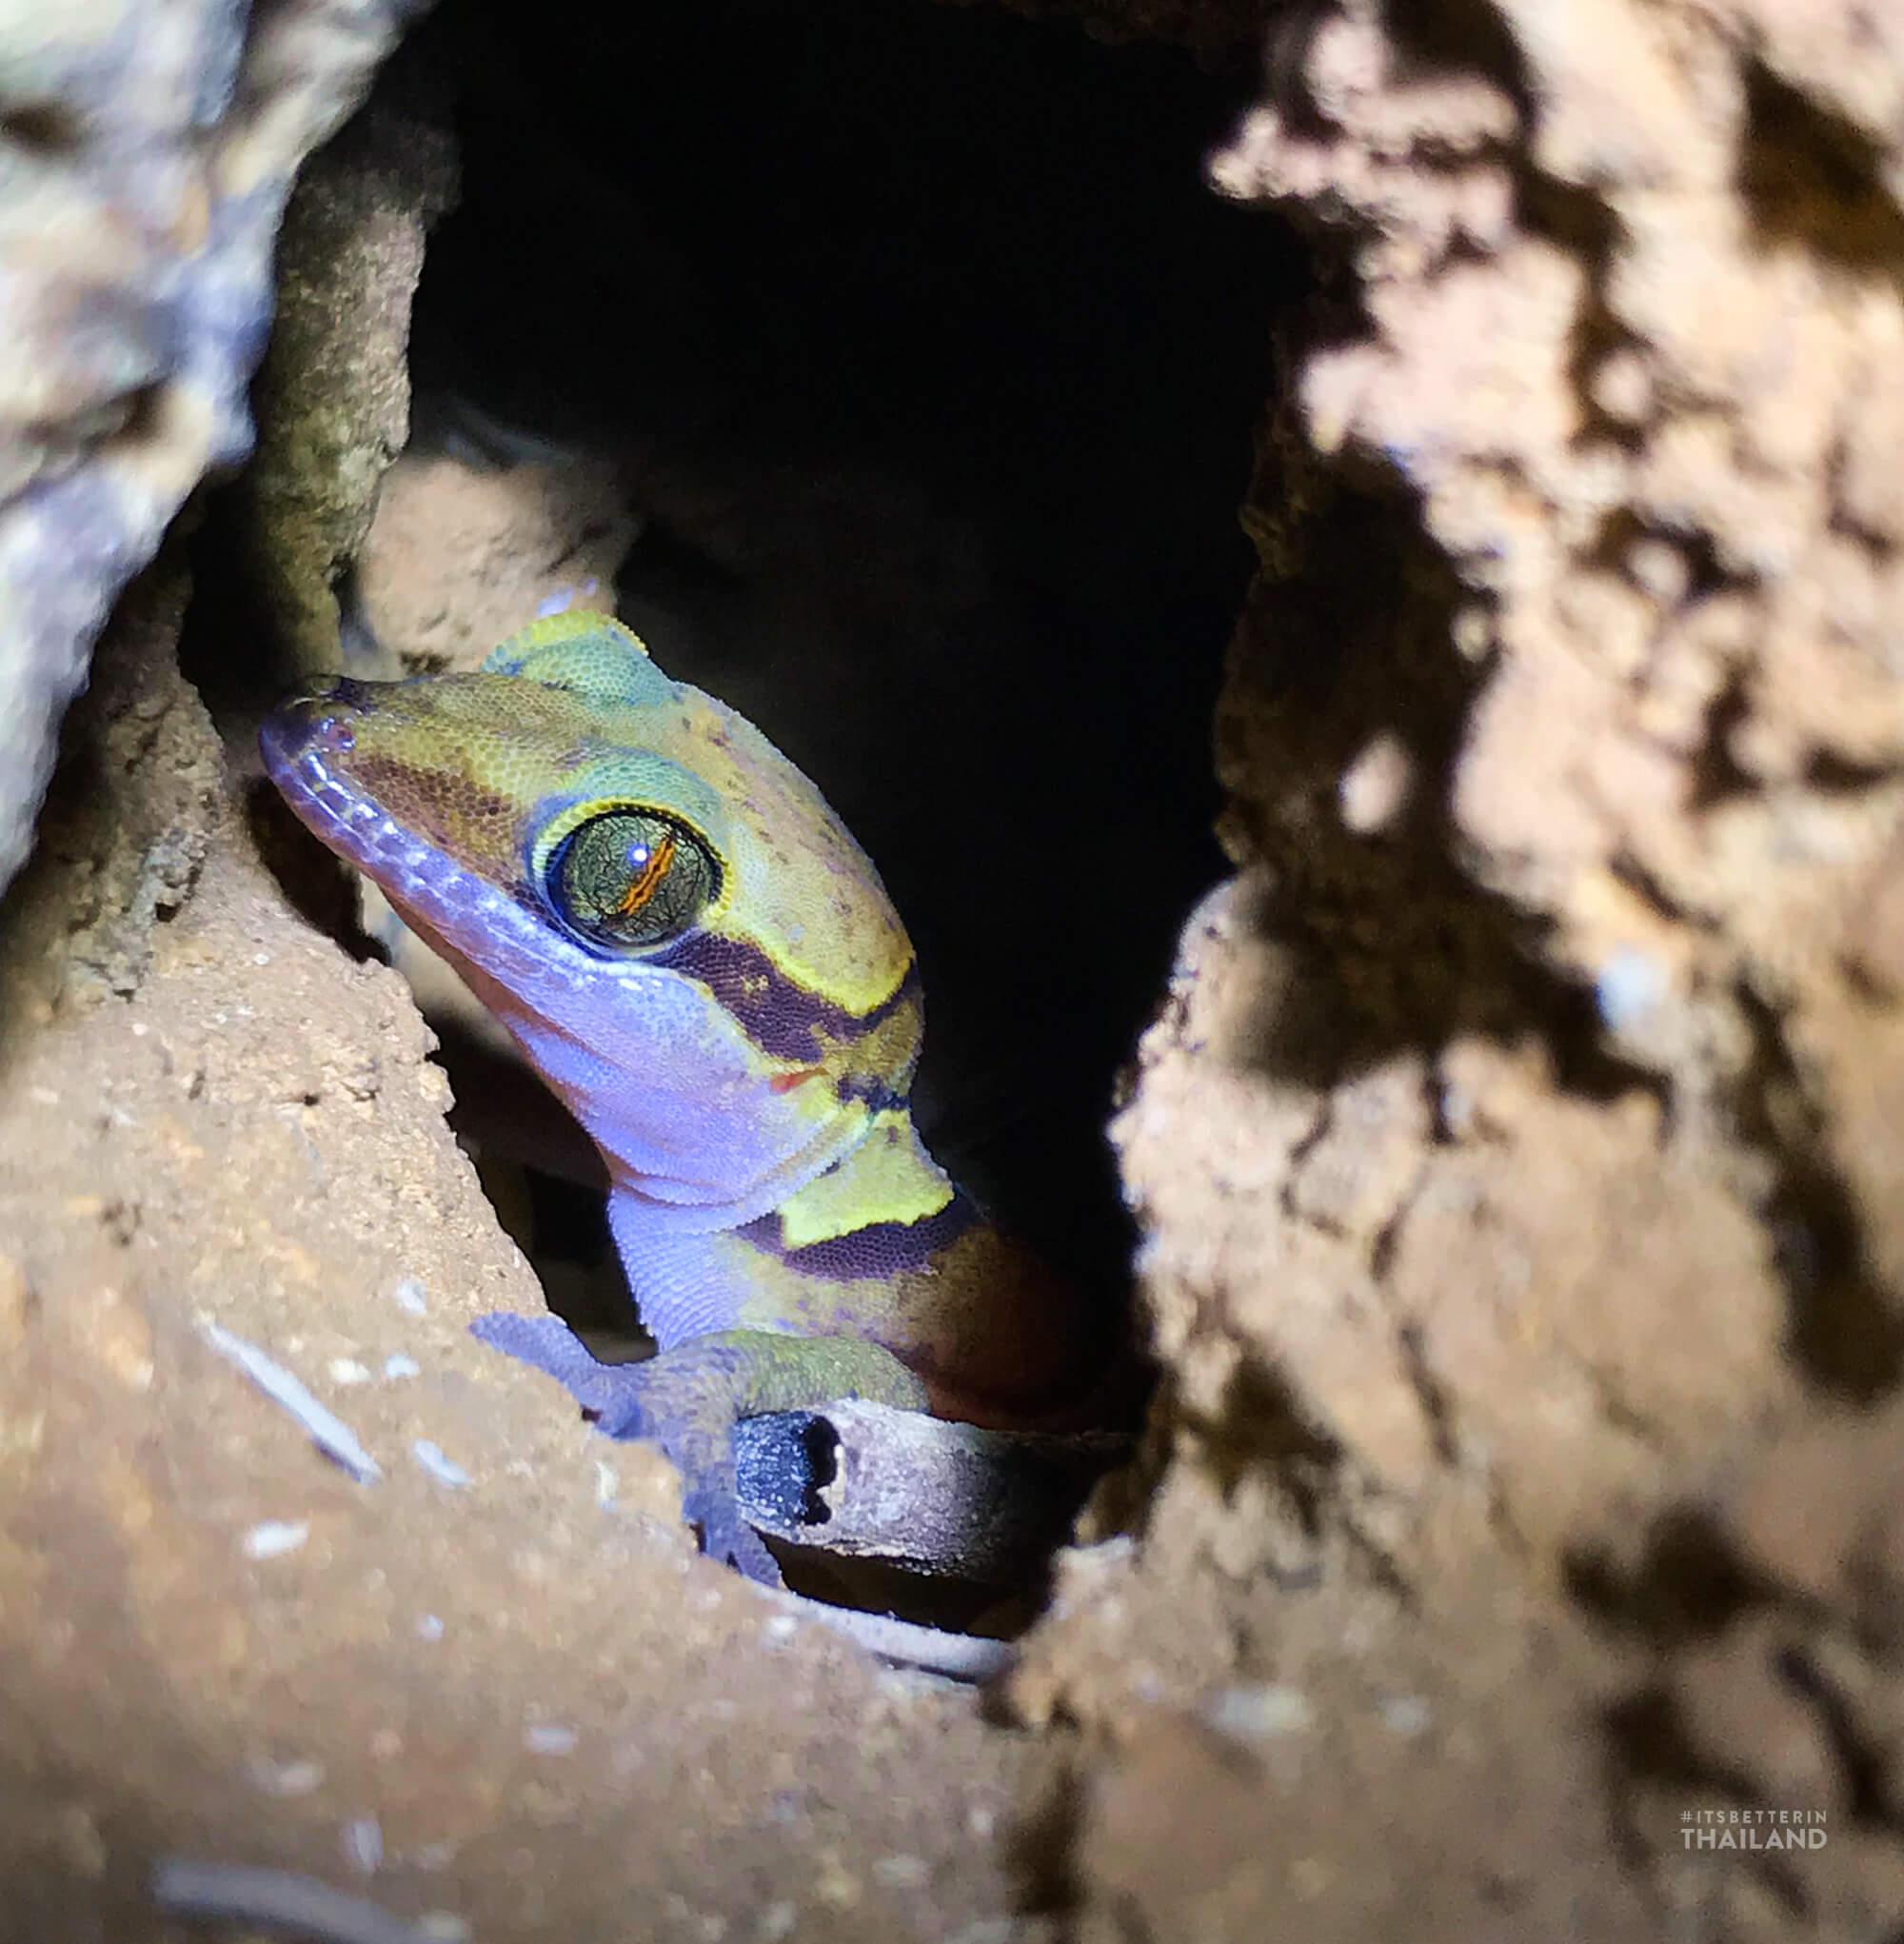 Cave gecko at Khao Sam Roi Yot, Thailand